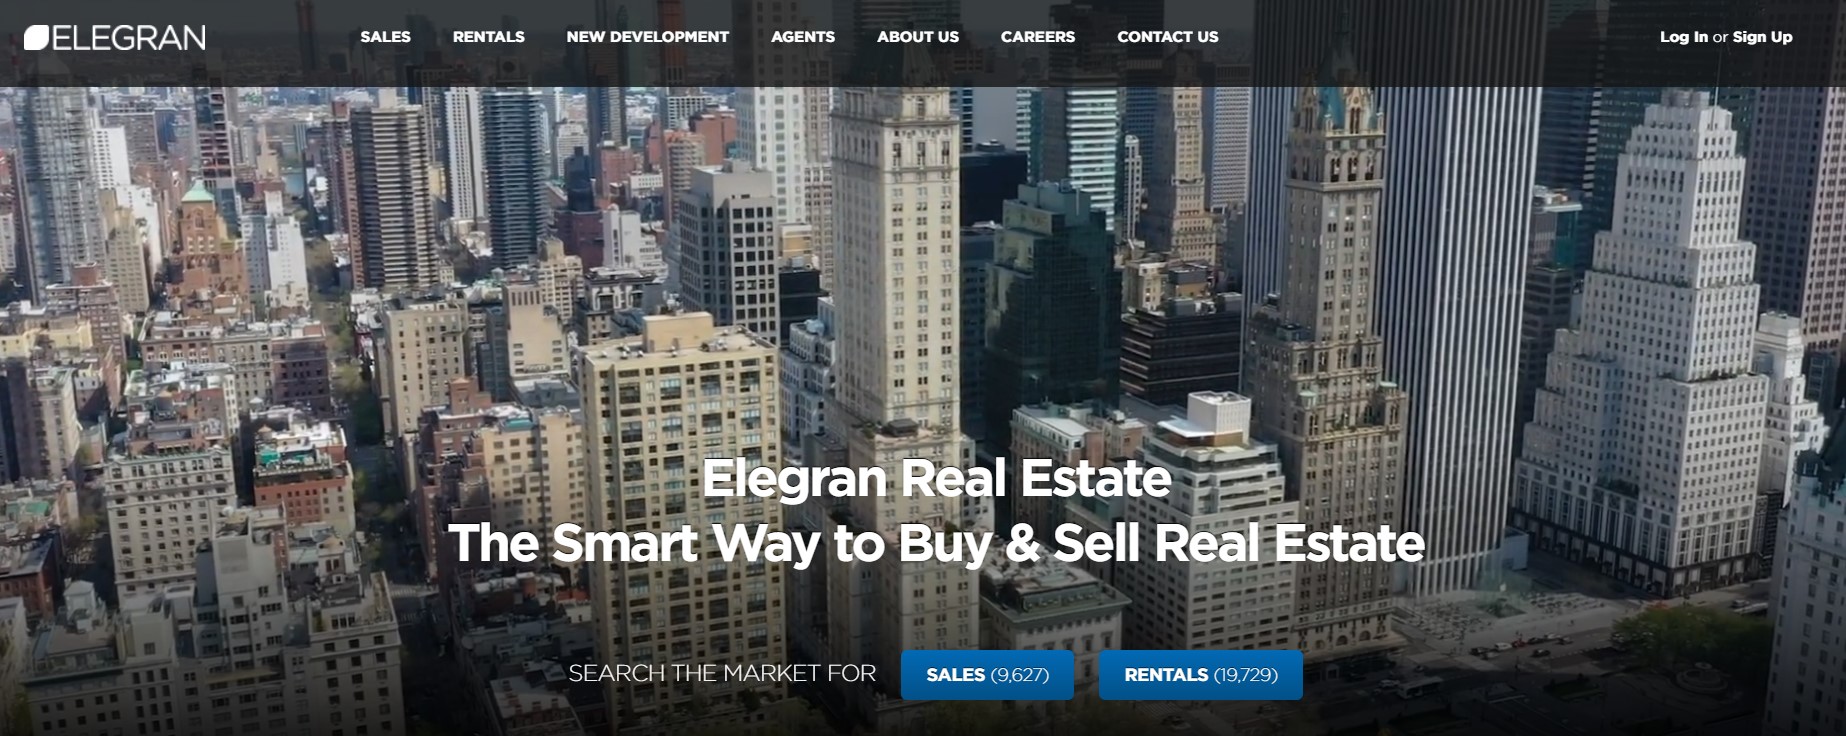 elegran real estate agent in new york